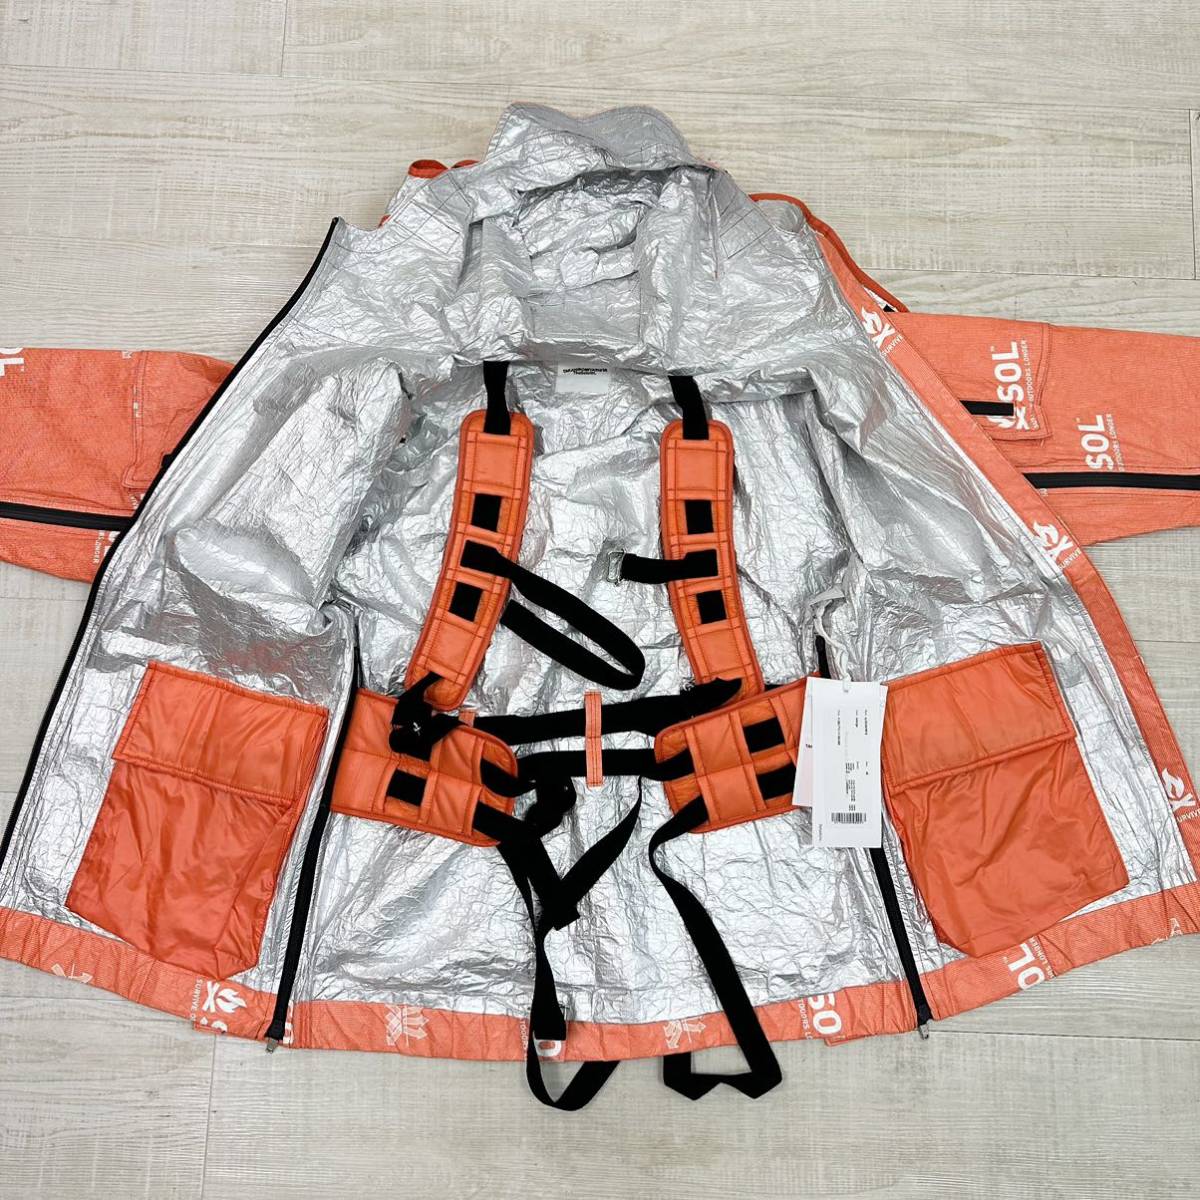 18aw 2018 TAKAHIRO MIYASHITA The Soloist ソロイスト flight jacket type Ⅱ フライト ジャケット タイプ 2 SOL サイズ 46 定価200.772円の画像4